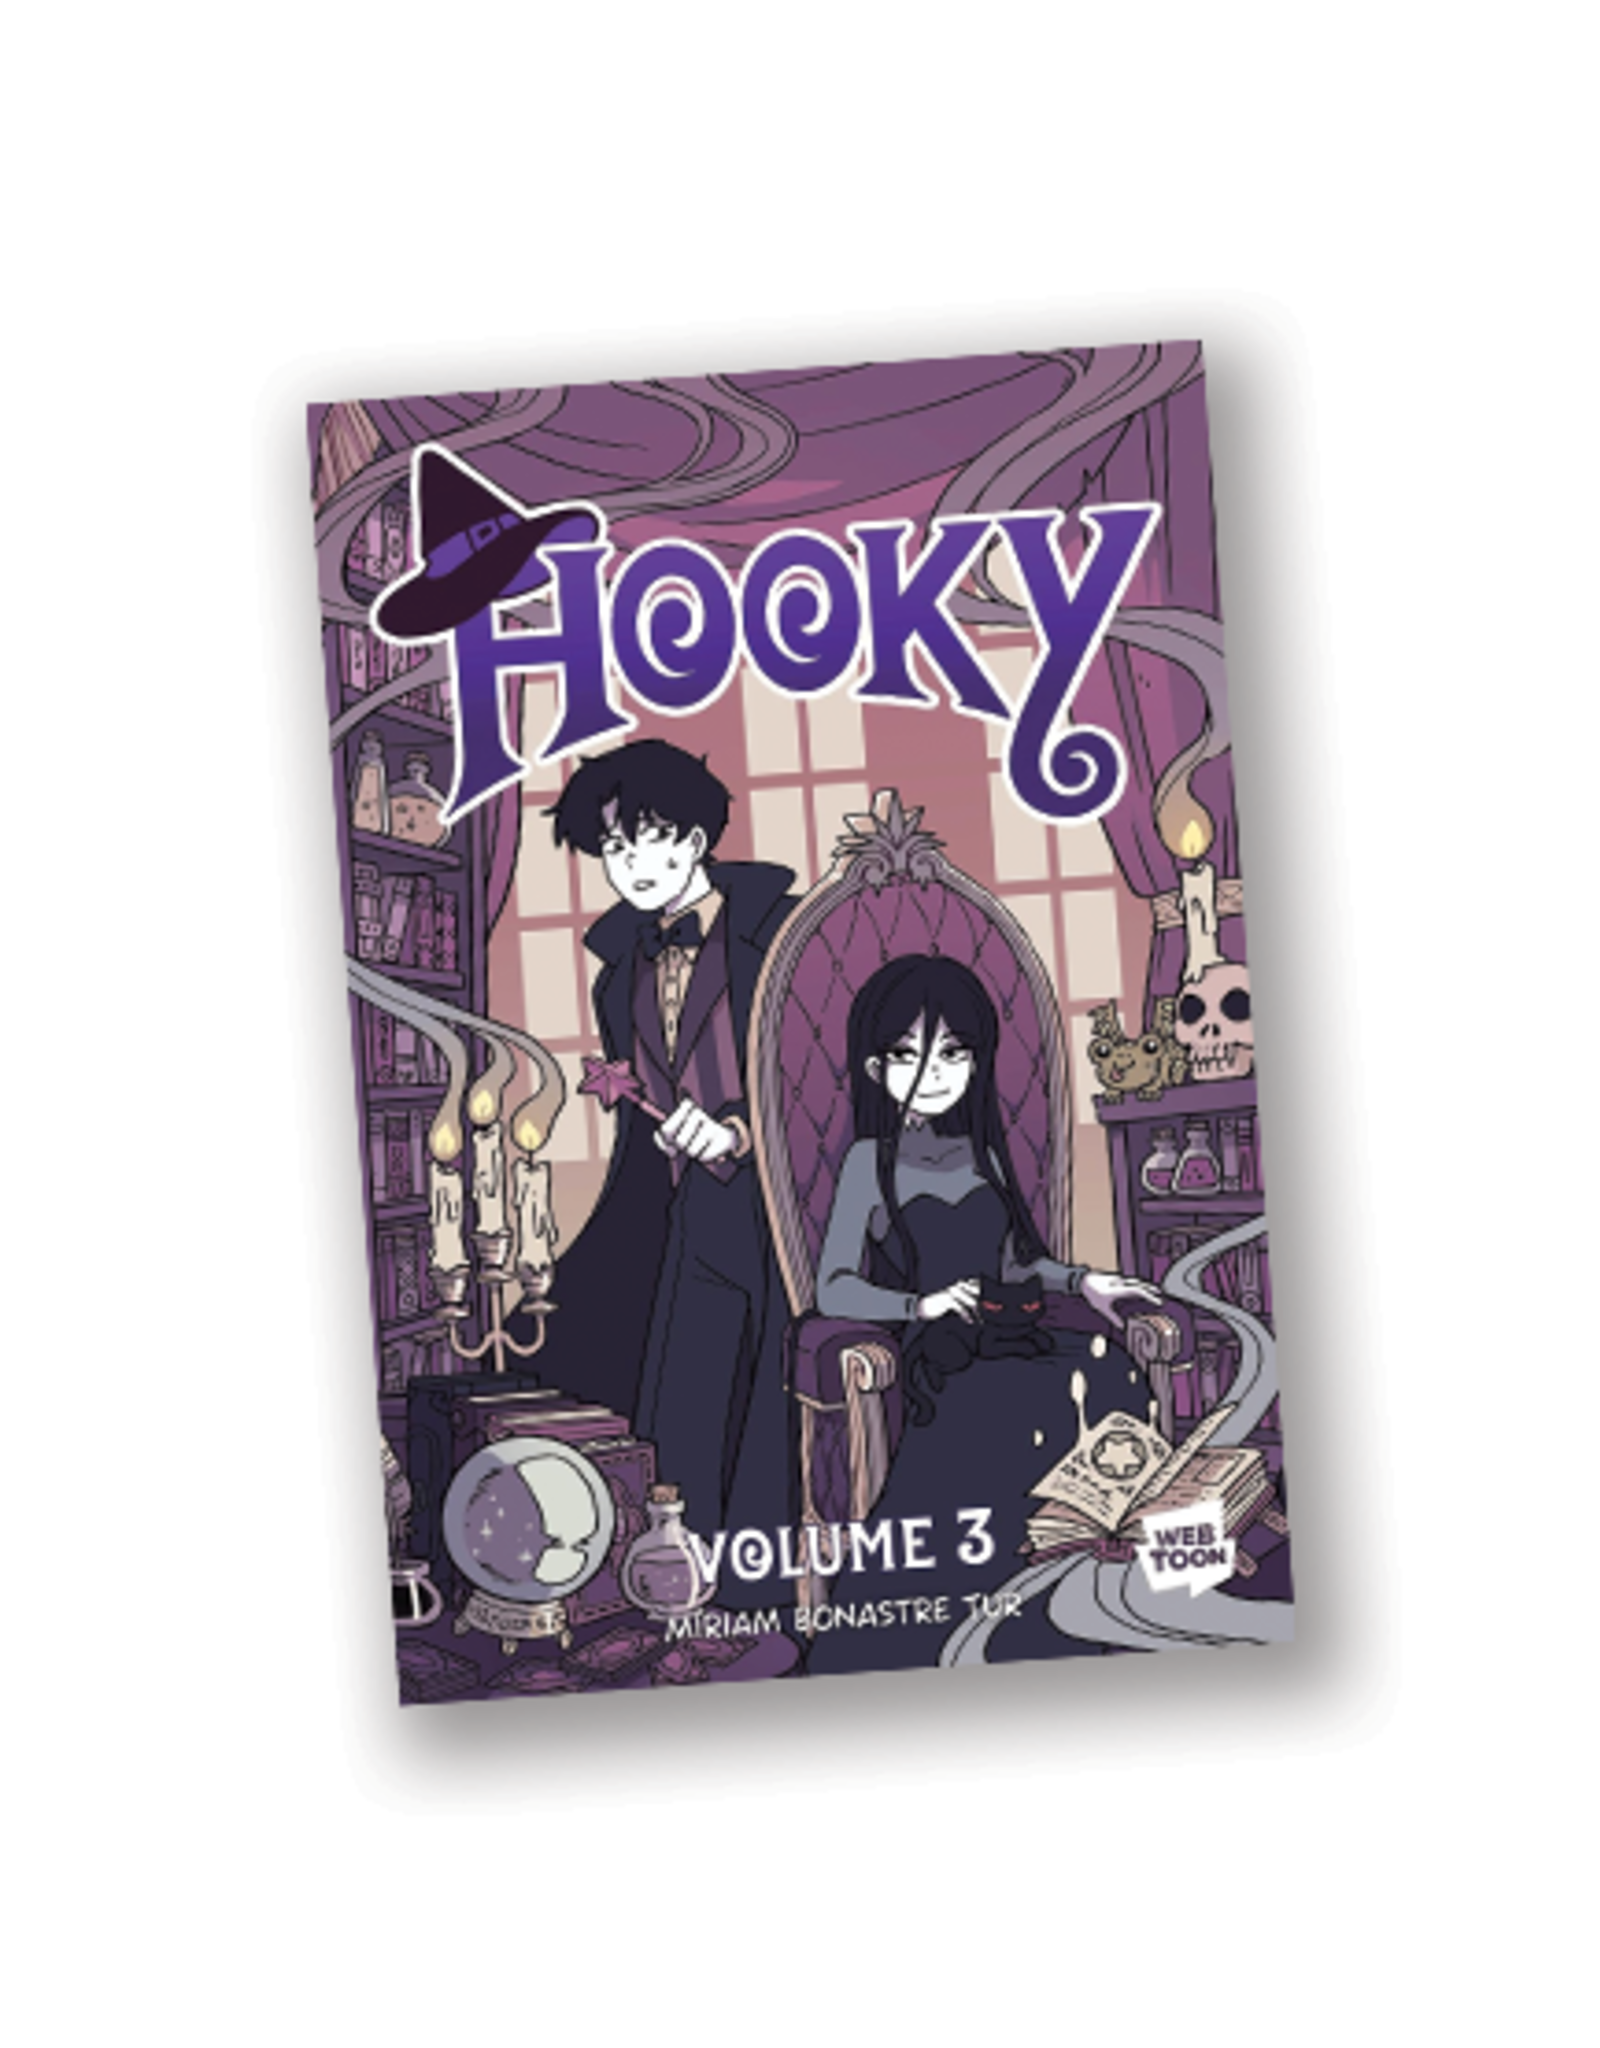 Hooky, Volume 3